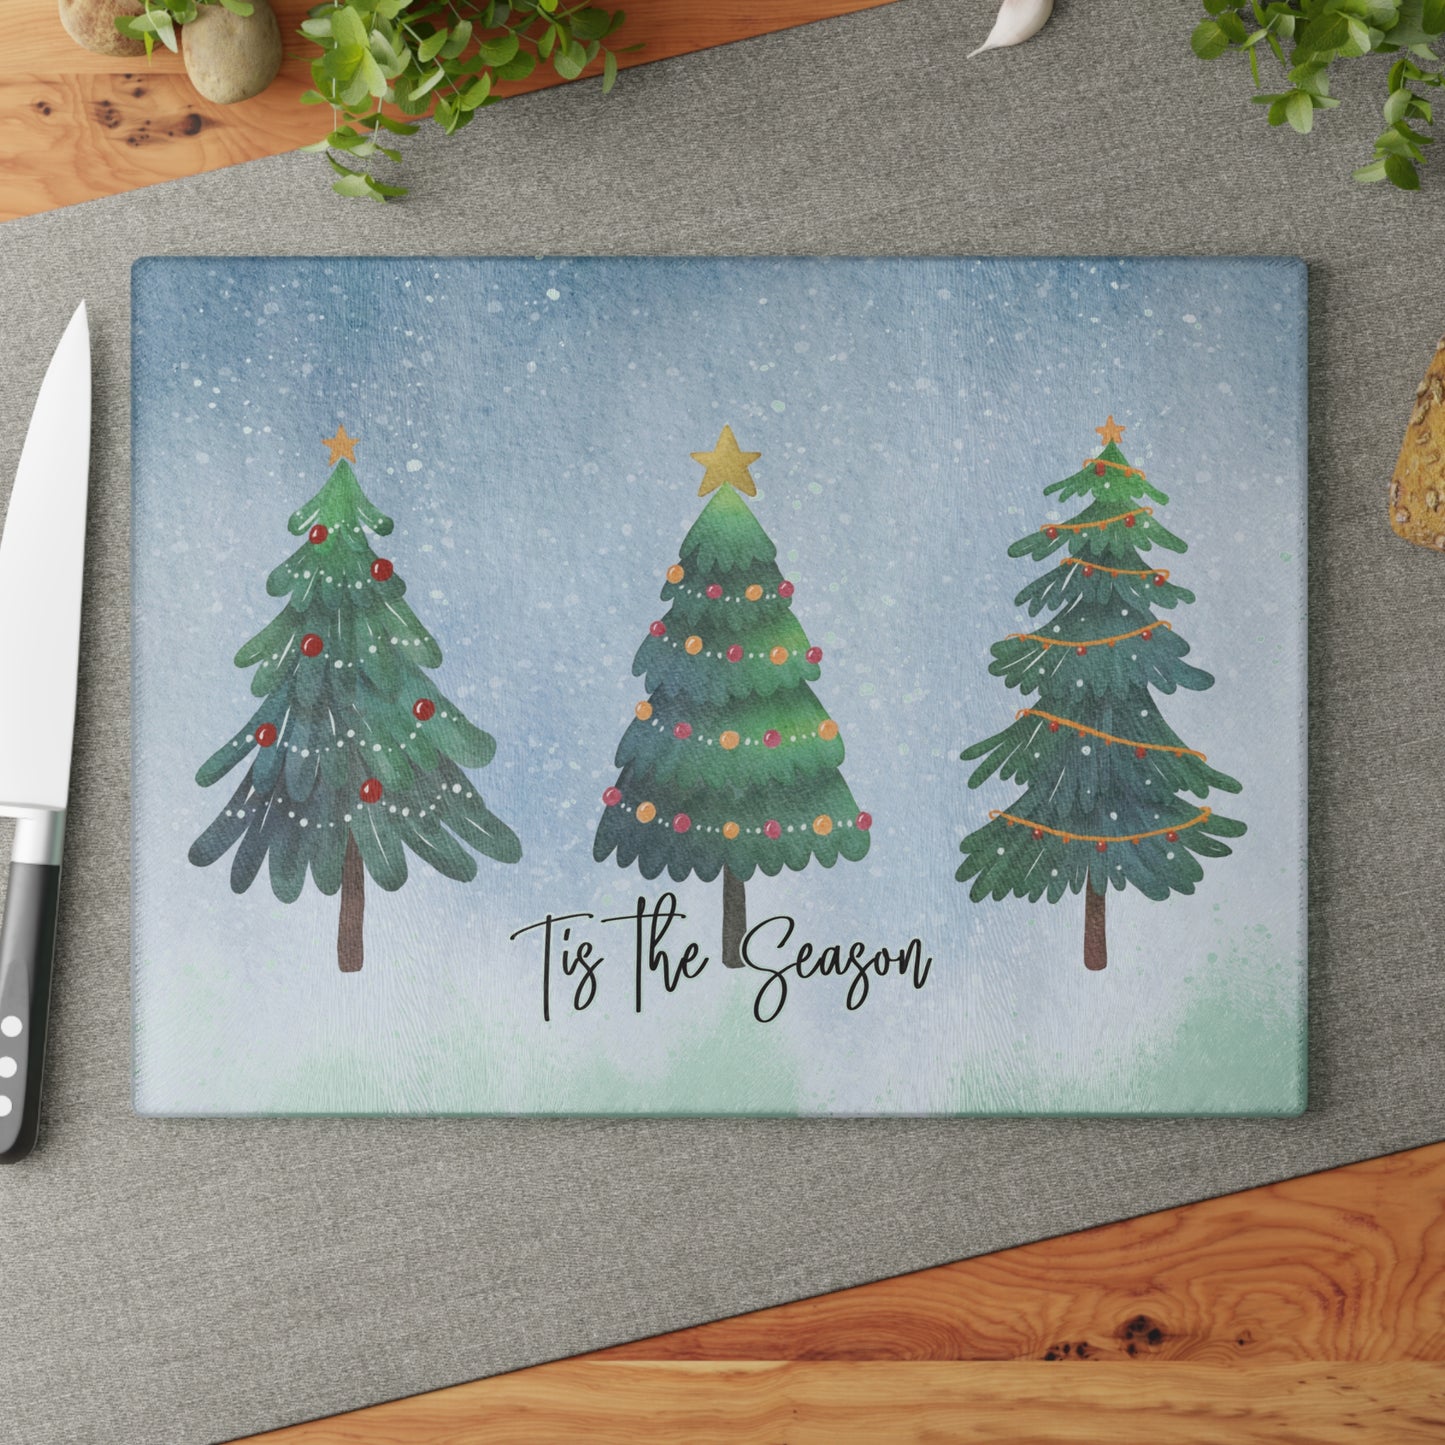 Tis The Season Christmas Tree Glass Cutting Board for the Holiday Gifts Ideas Seasonal Treasure Country Home Farm